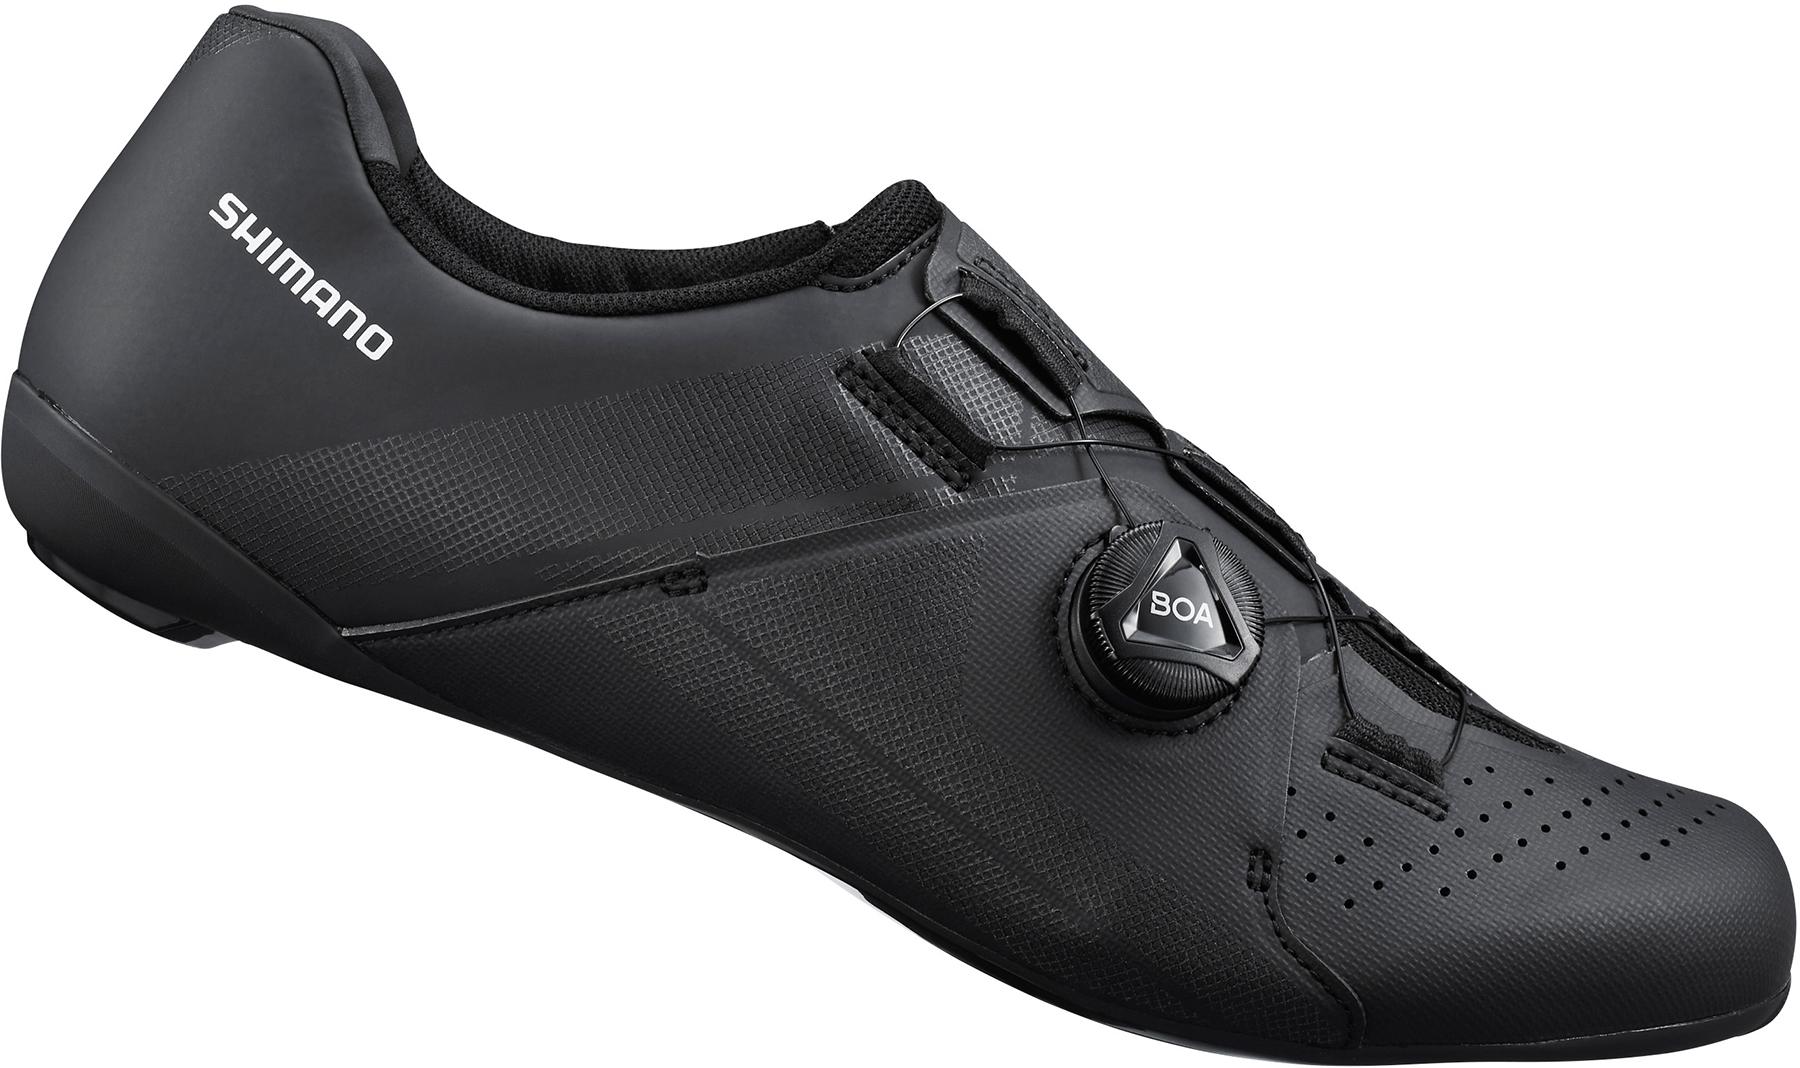 Shimano Rc3 Road Shoes - Black